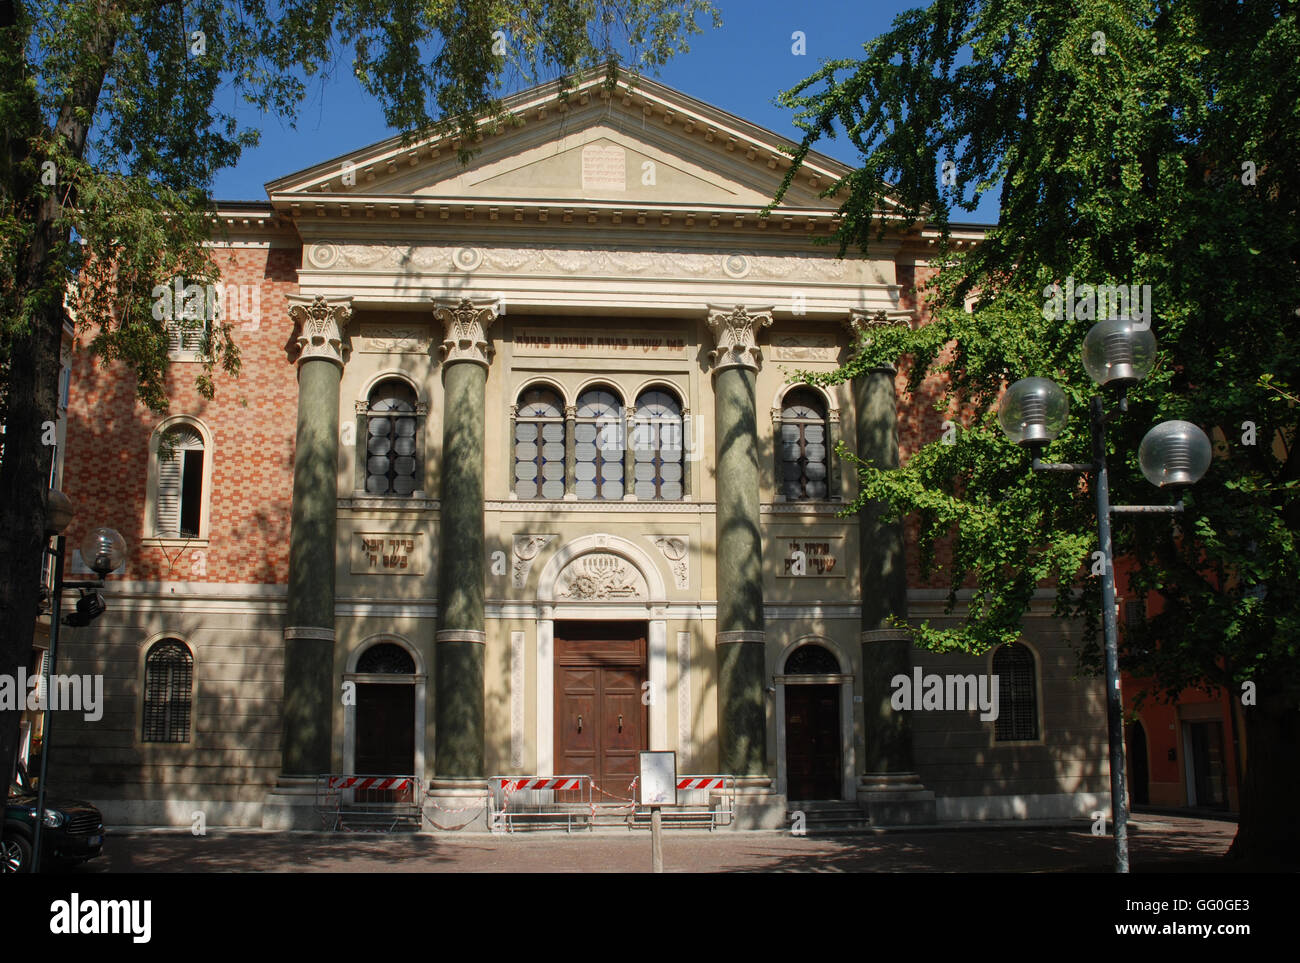 5620-La Modena, Italie, synagogue construite en 1873 Banque D'Images